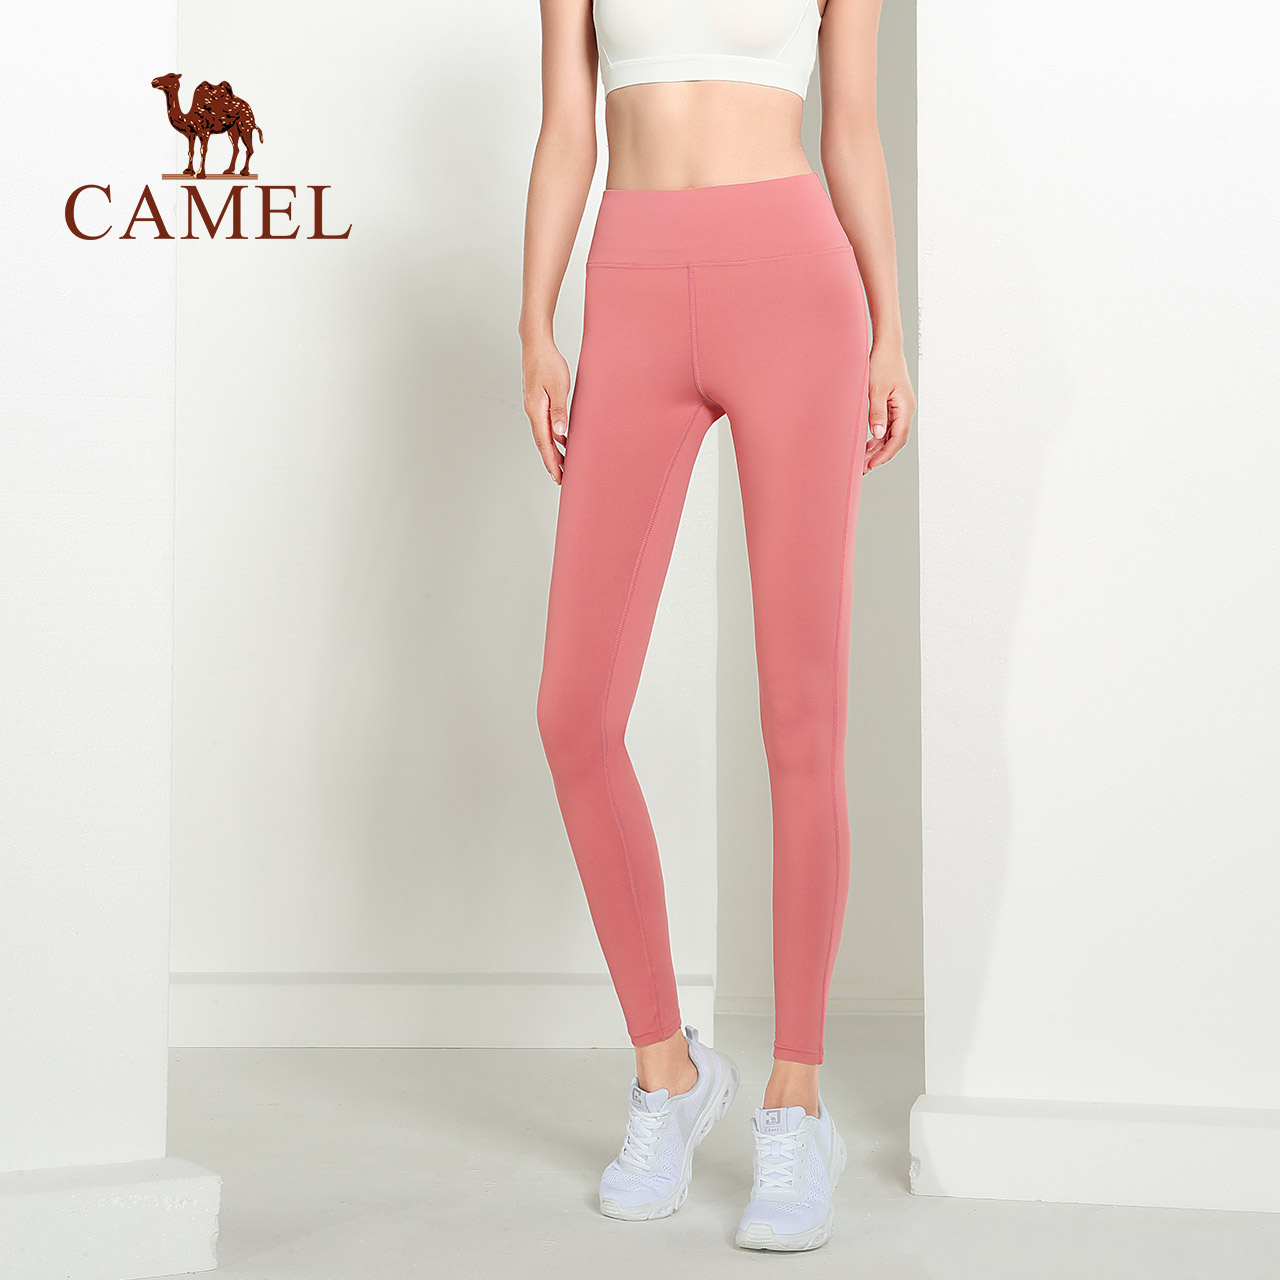 Camel Yoga Pants Women's Elastic Tights Yoga Honey Hip Pants Long Pants Running Fitness Pants High Waist Autumn Sports Pants